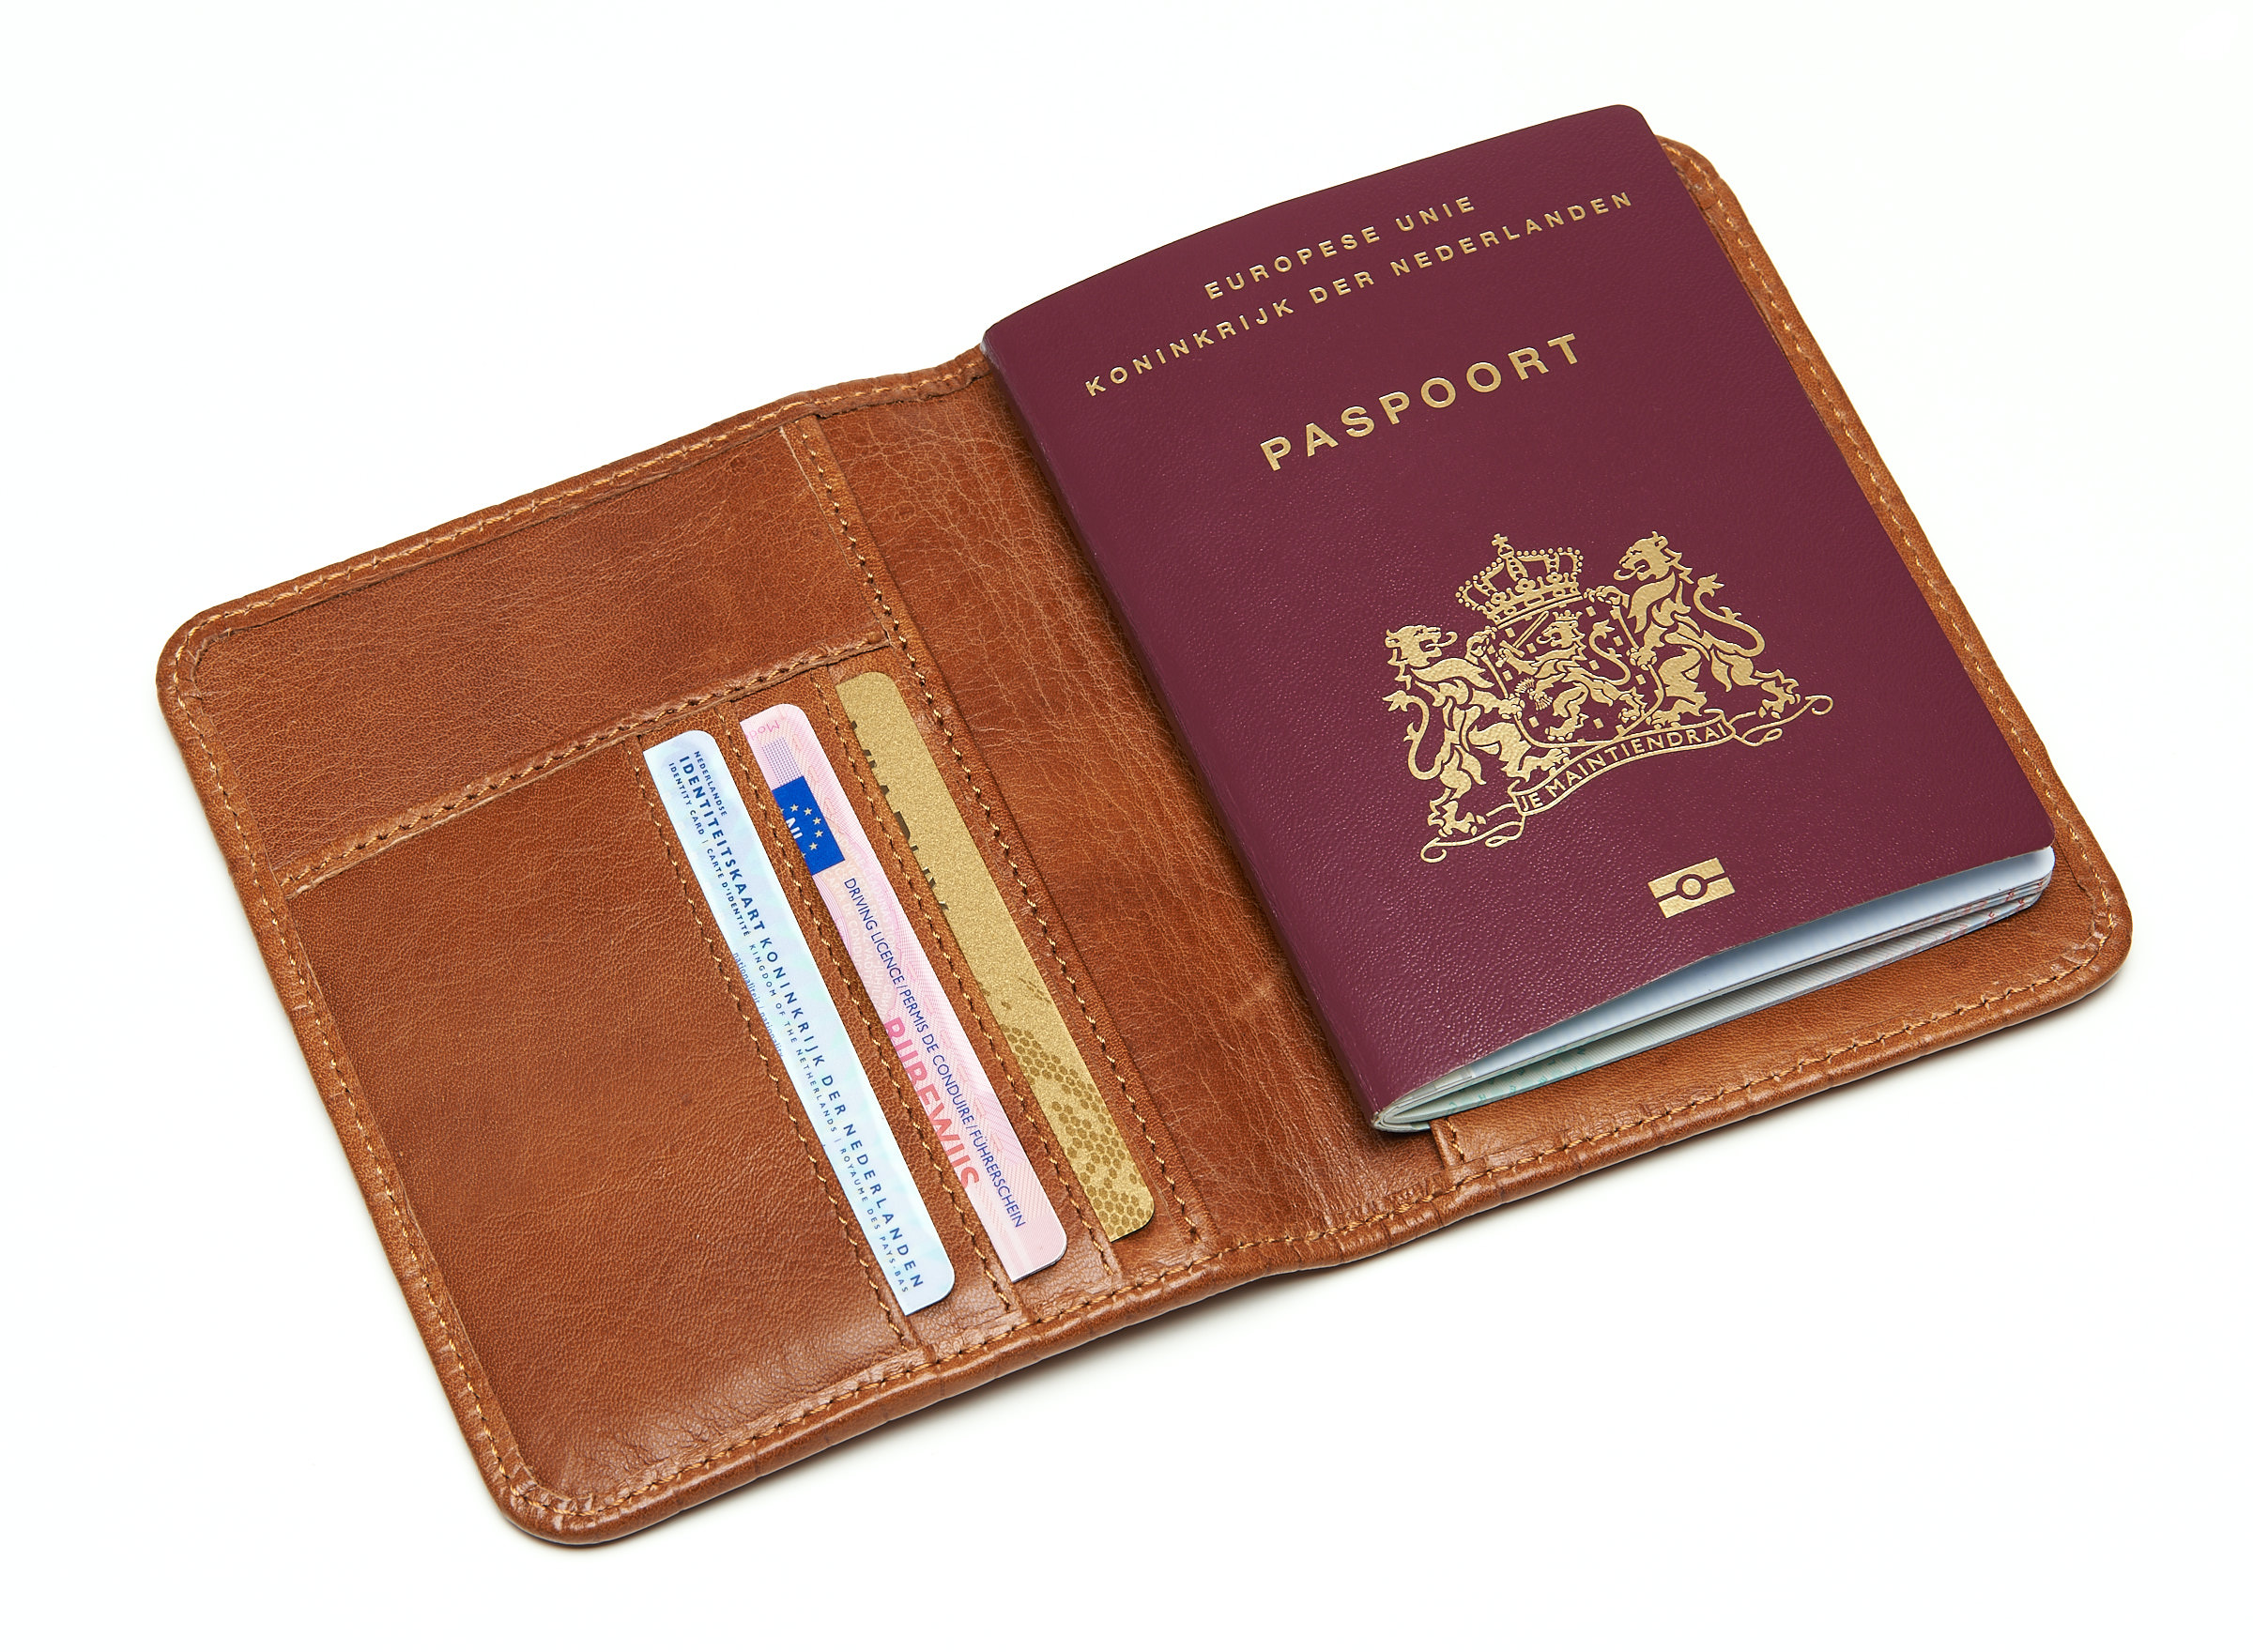 Rio cross paspoort chabo bags - Rio croco passport cover camel 1 - 58